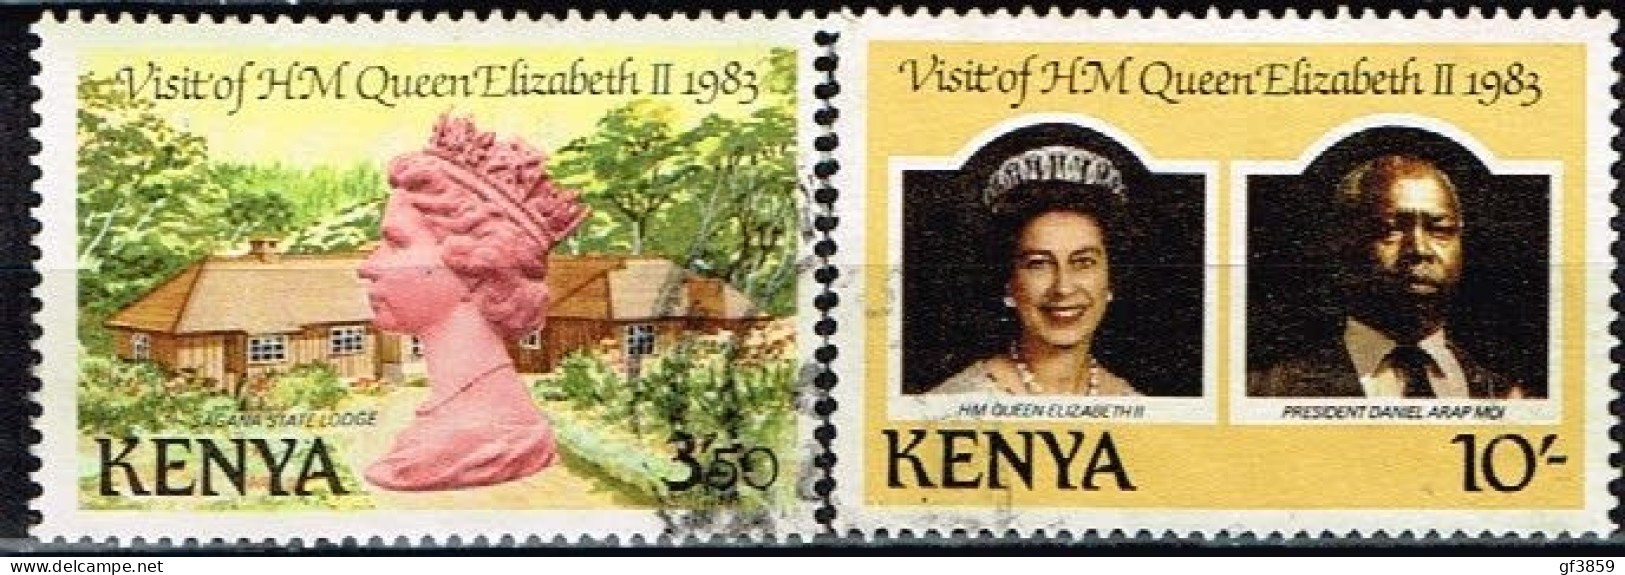 KENYA / Oblitérés/Used / 1983 - Visite De La Reine Elizabeth II - Kenya (1963-...)